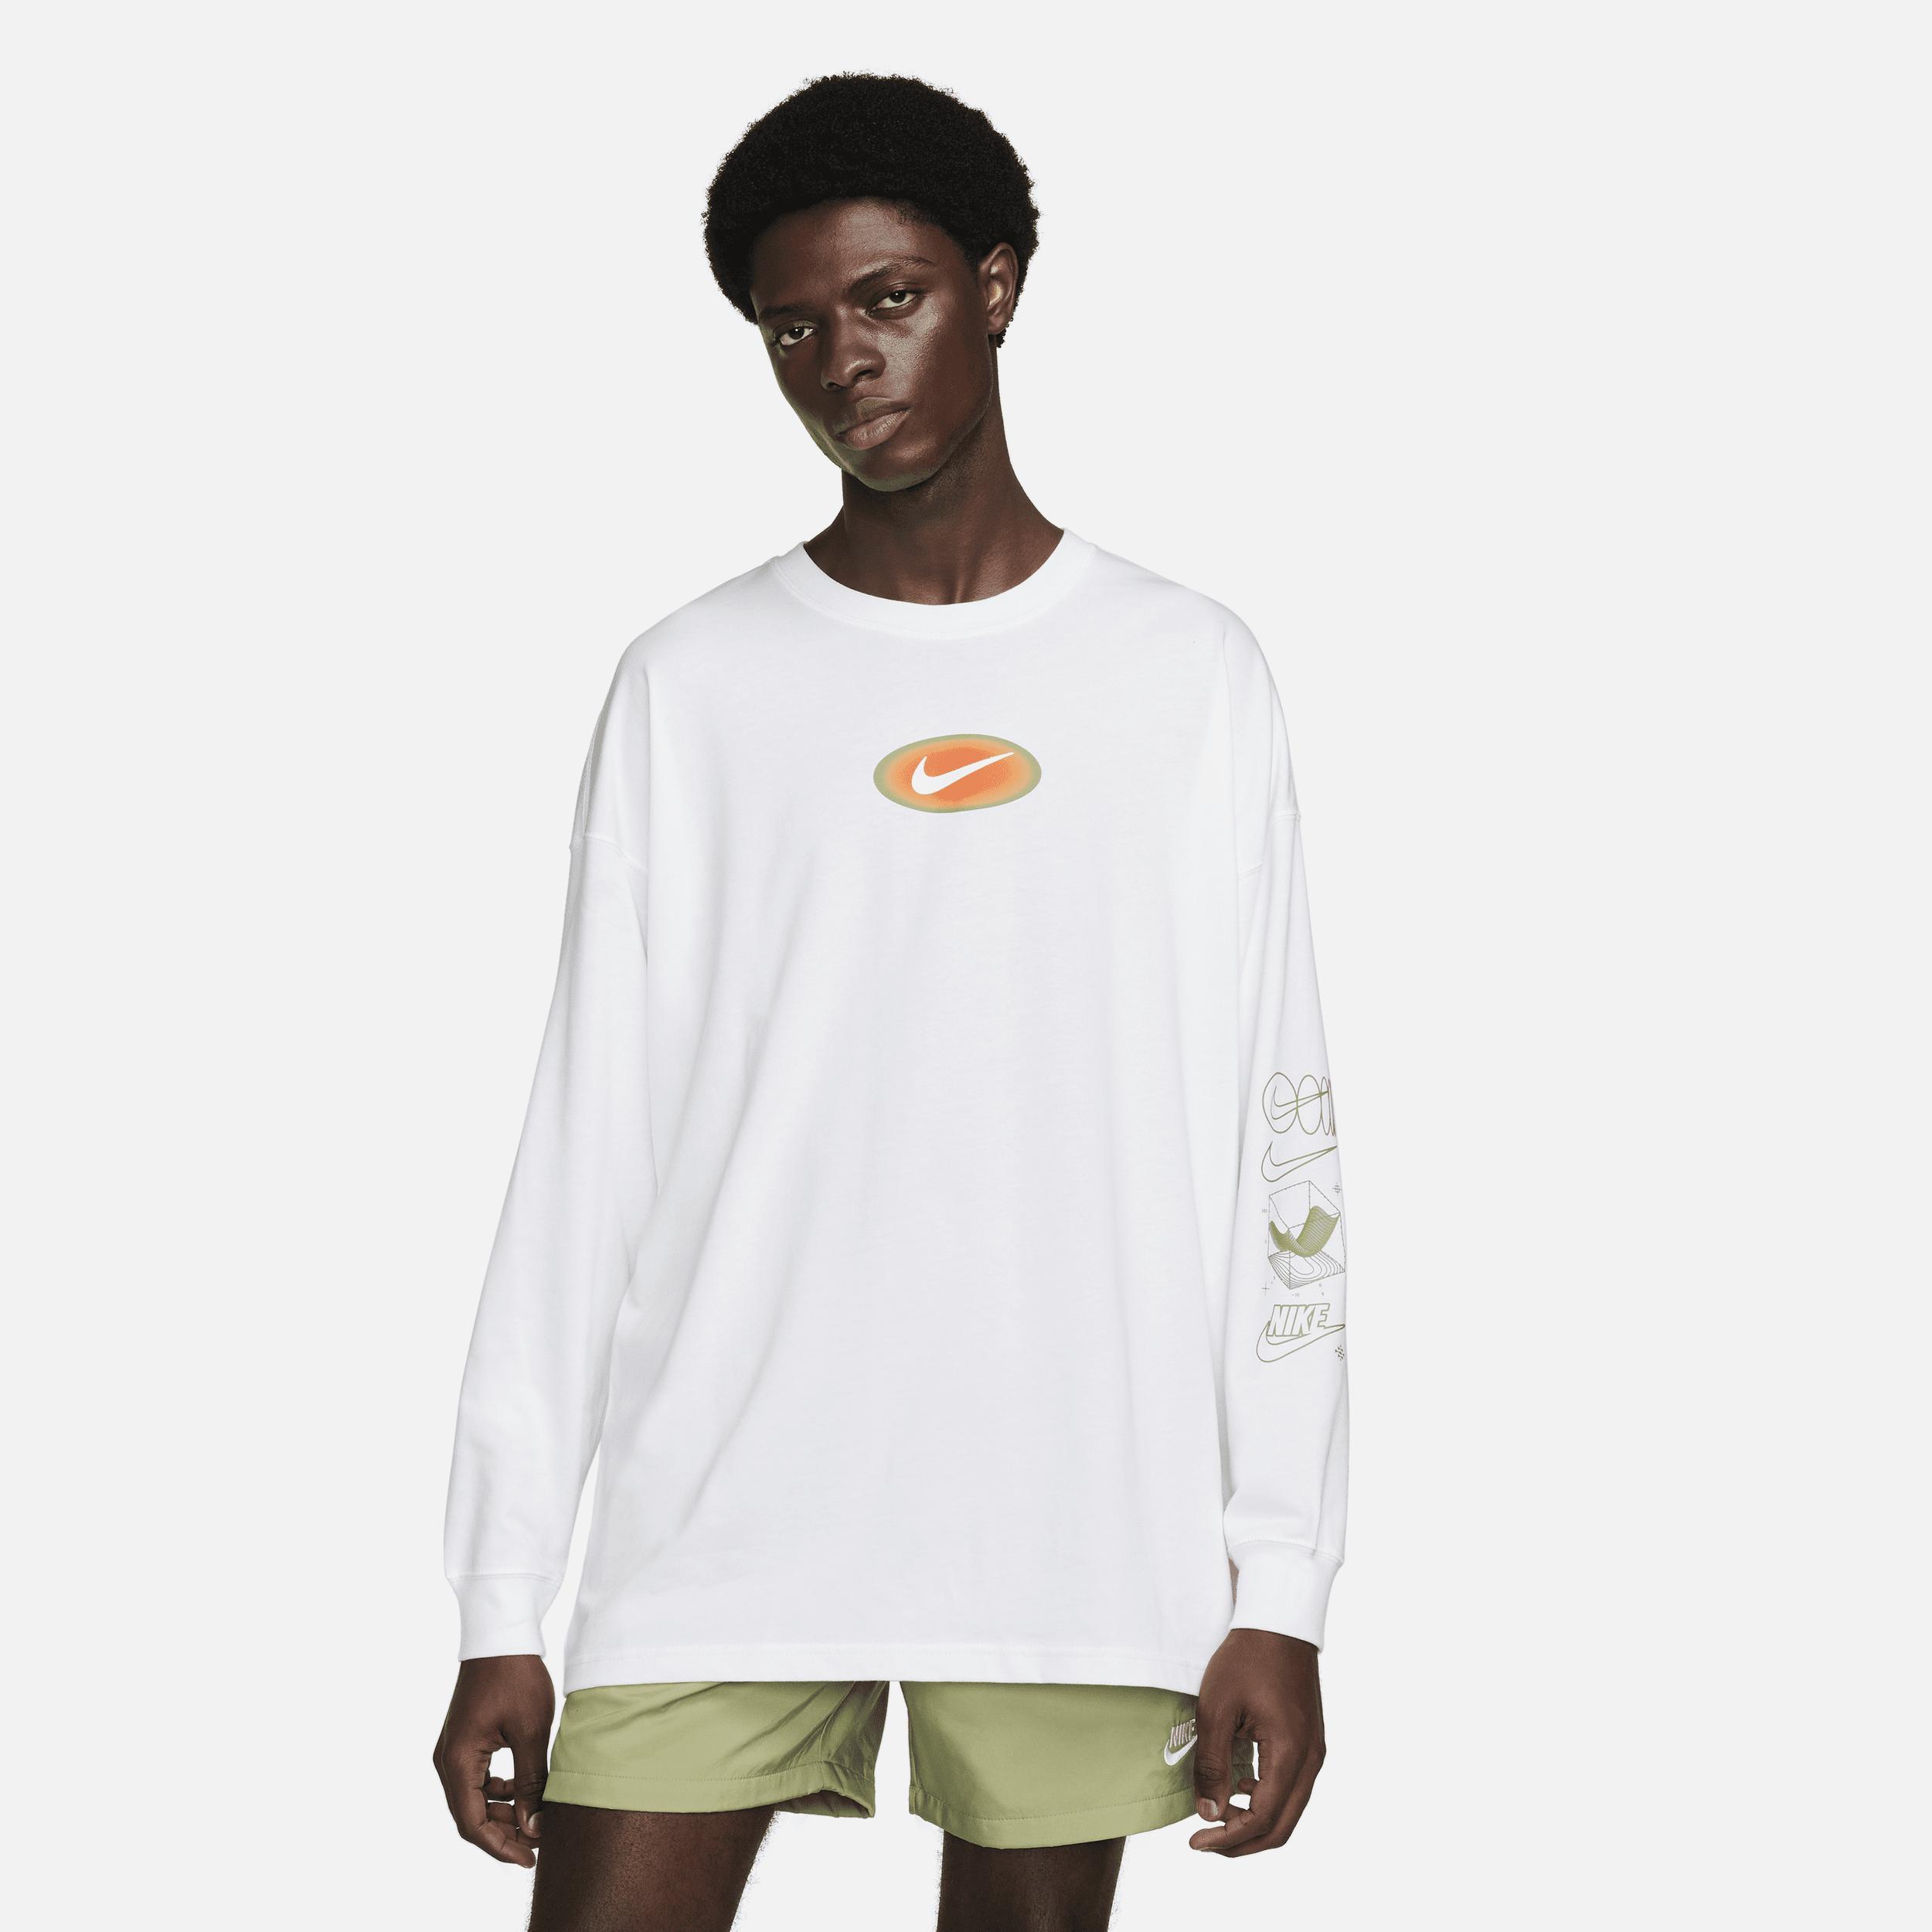 Men's Nike Sportswear Long-Sleeve T-Shirt Product Image